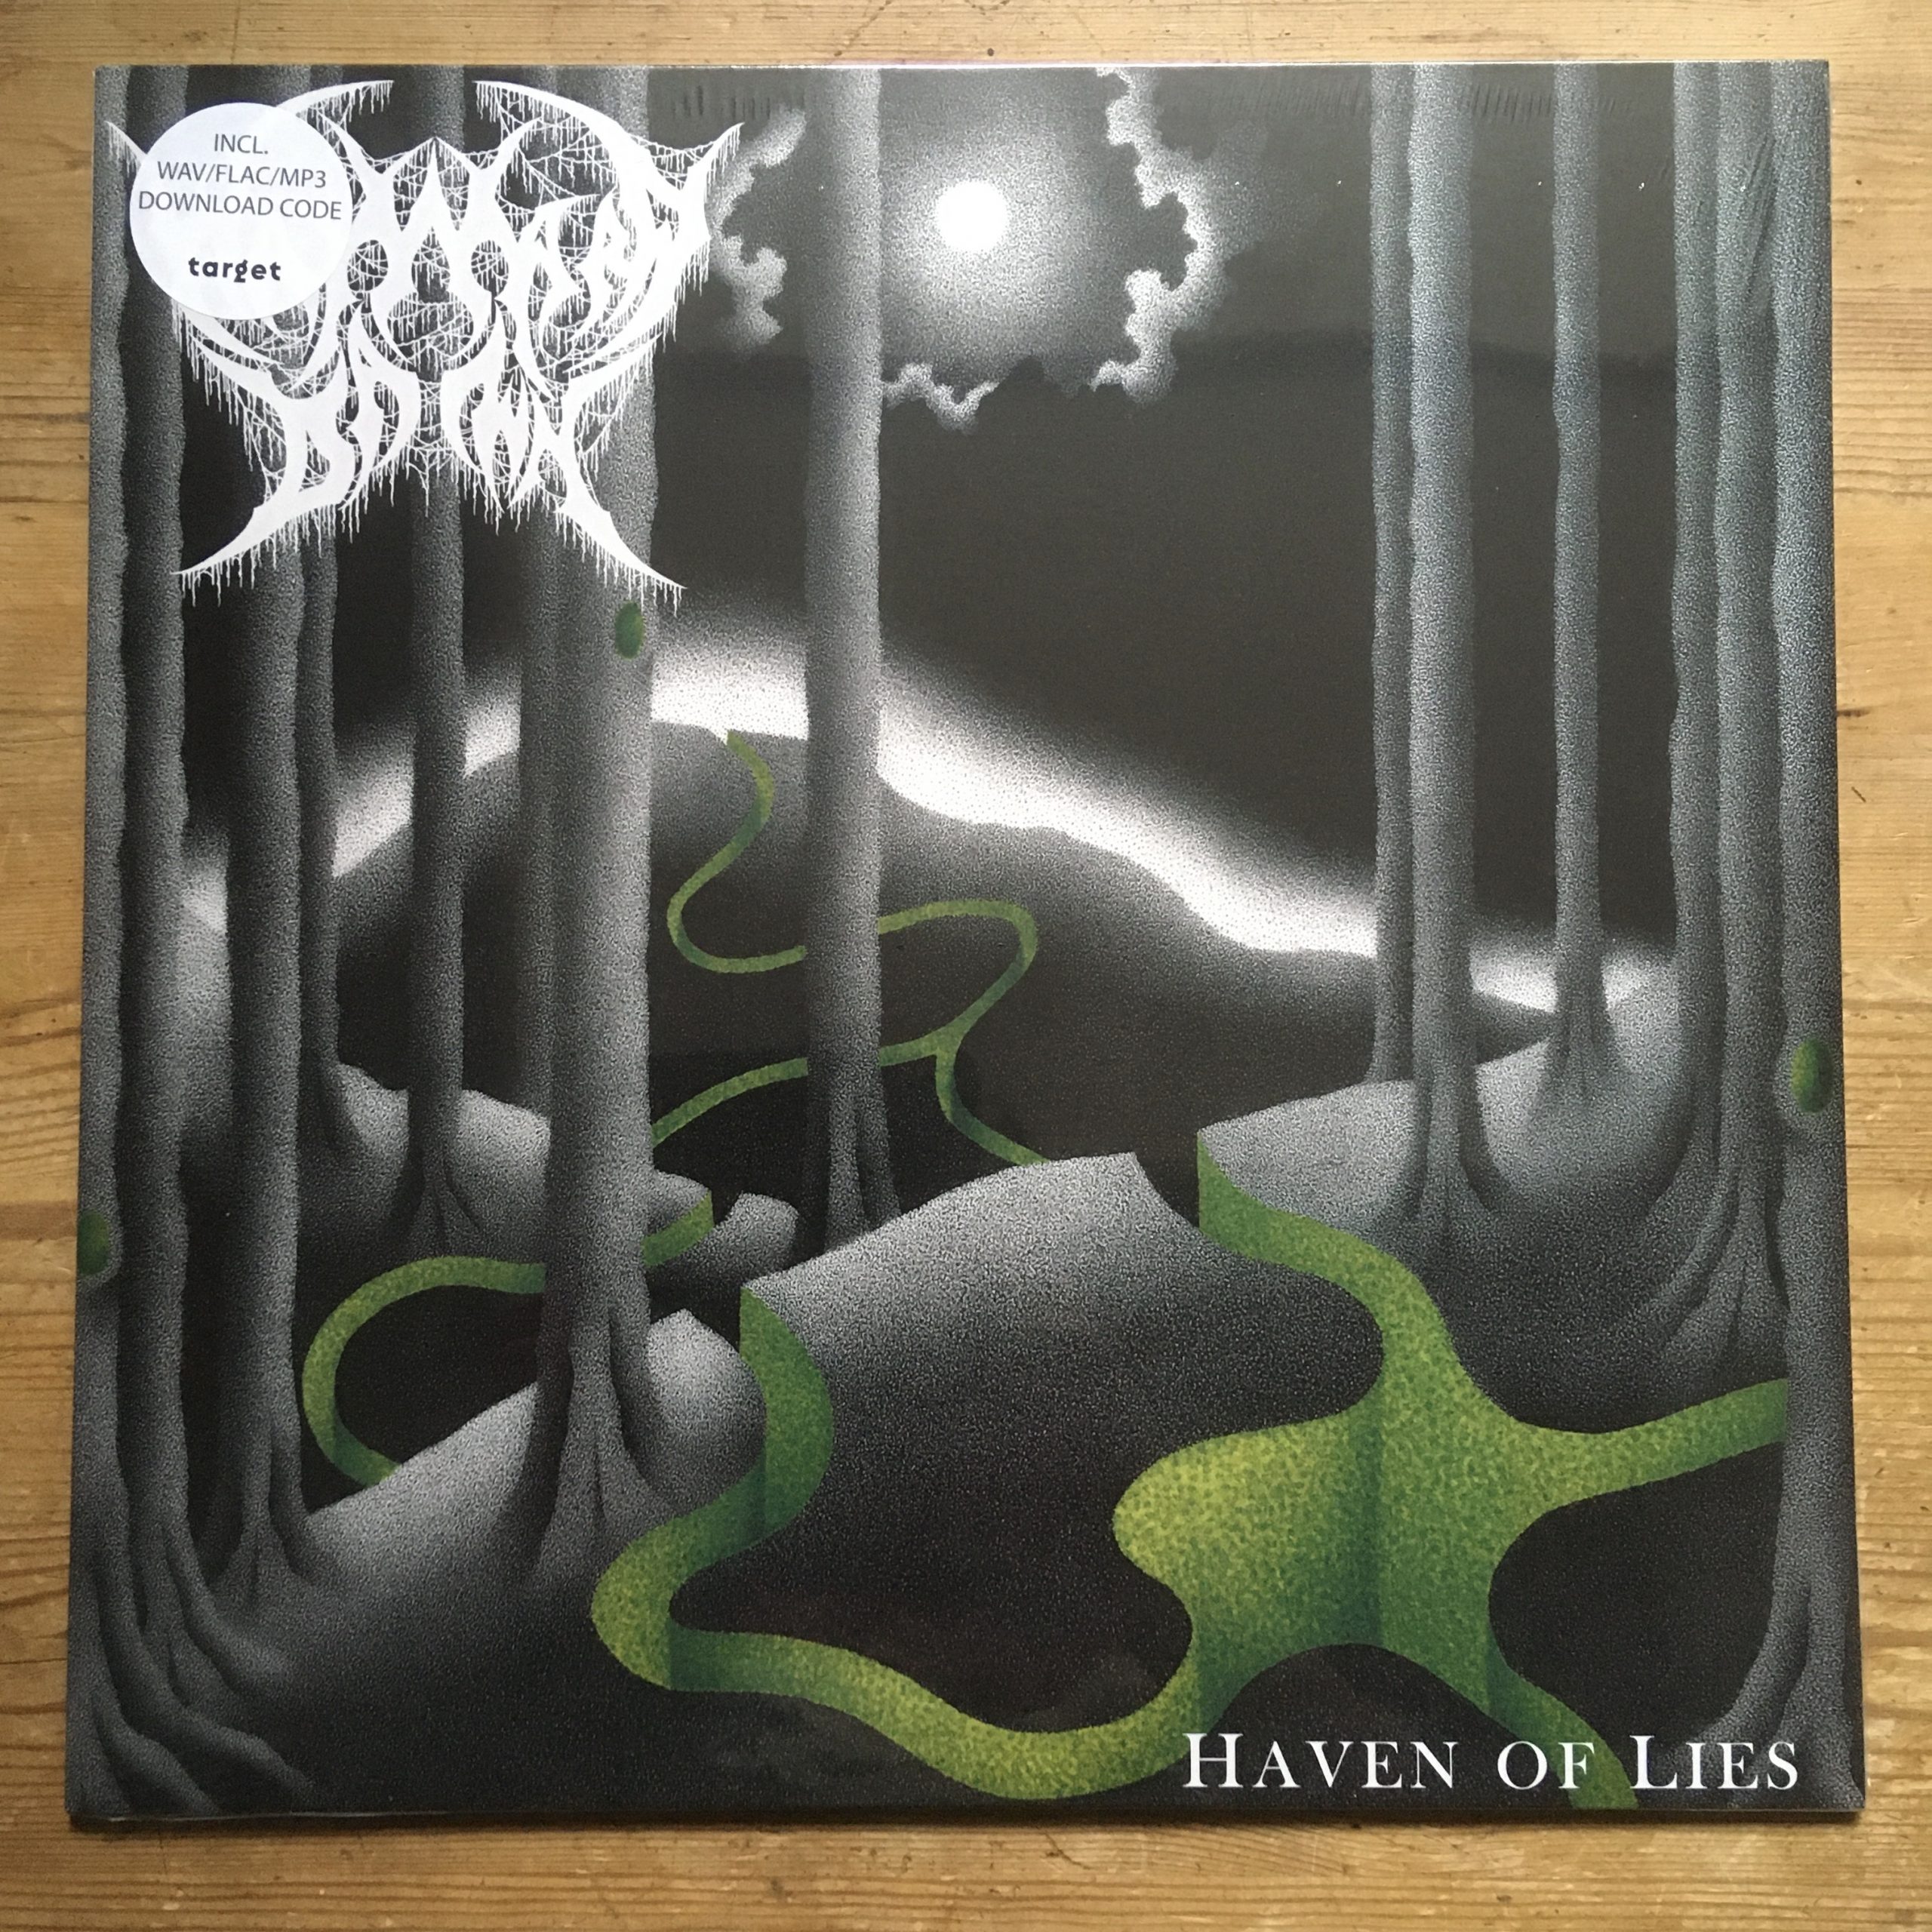 Photo of the Wayward Dawn - "Haven of Lies" LP (Black vinyl)